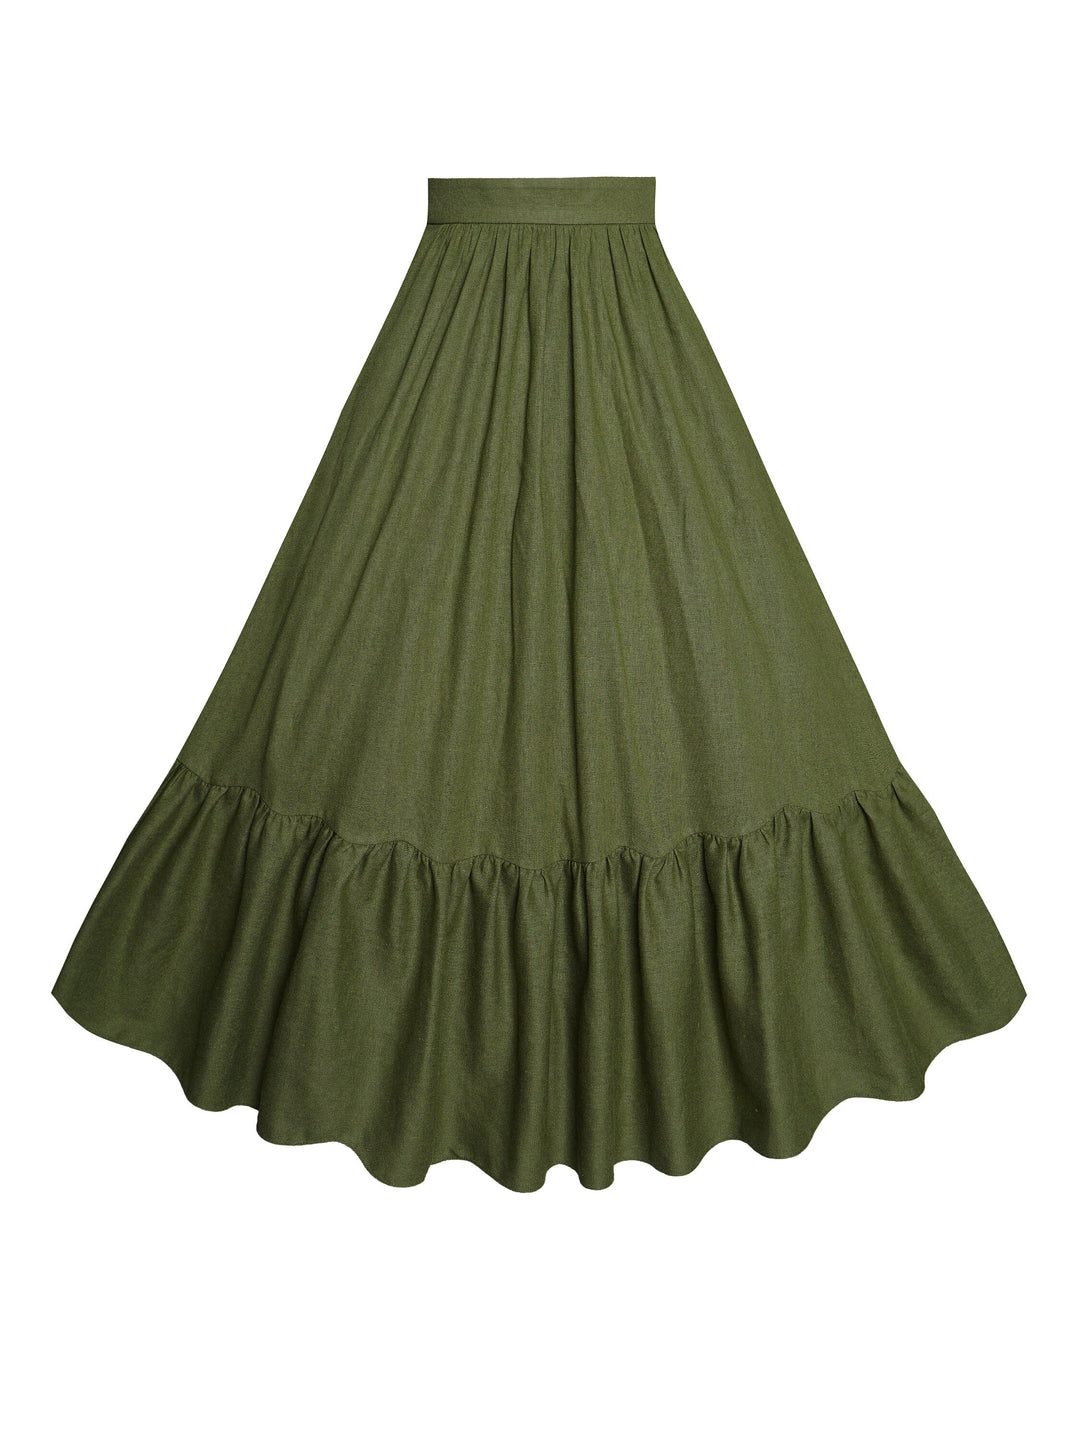 RTS - Size M - Rosita Skirt in Hunters Green Linen